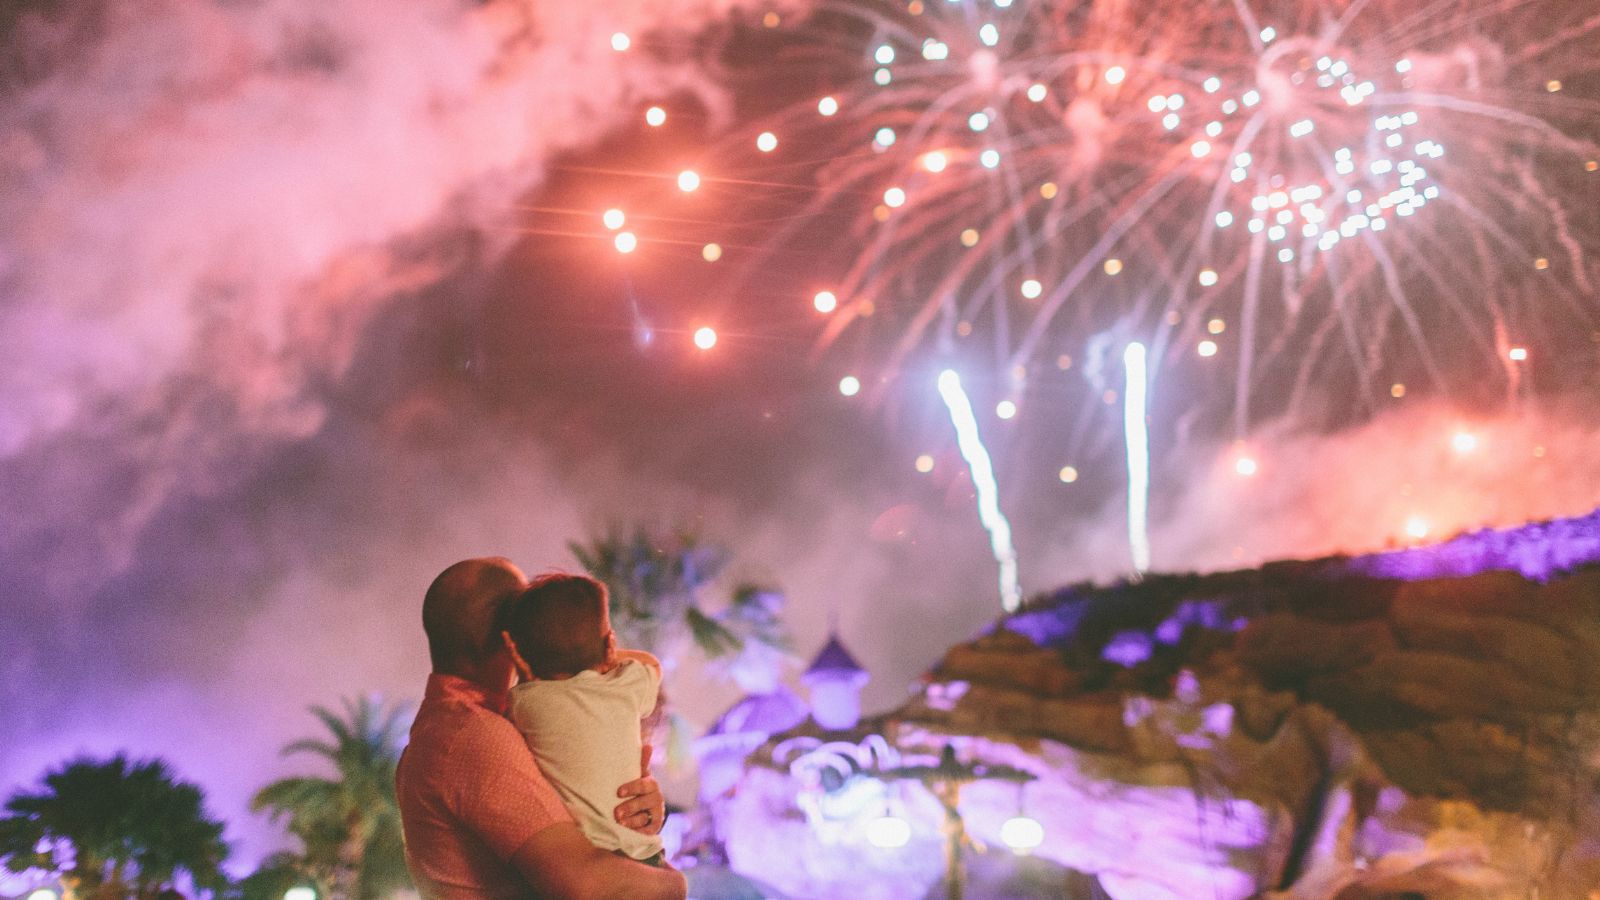 Father and child watching fireworks (Photo: @crystalmariesing via Twenty20)